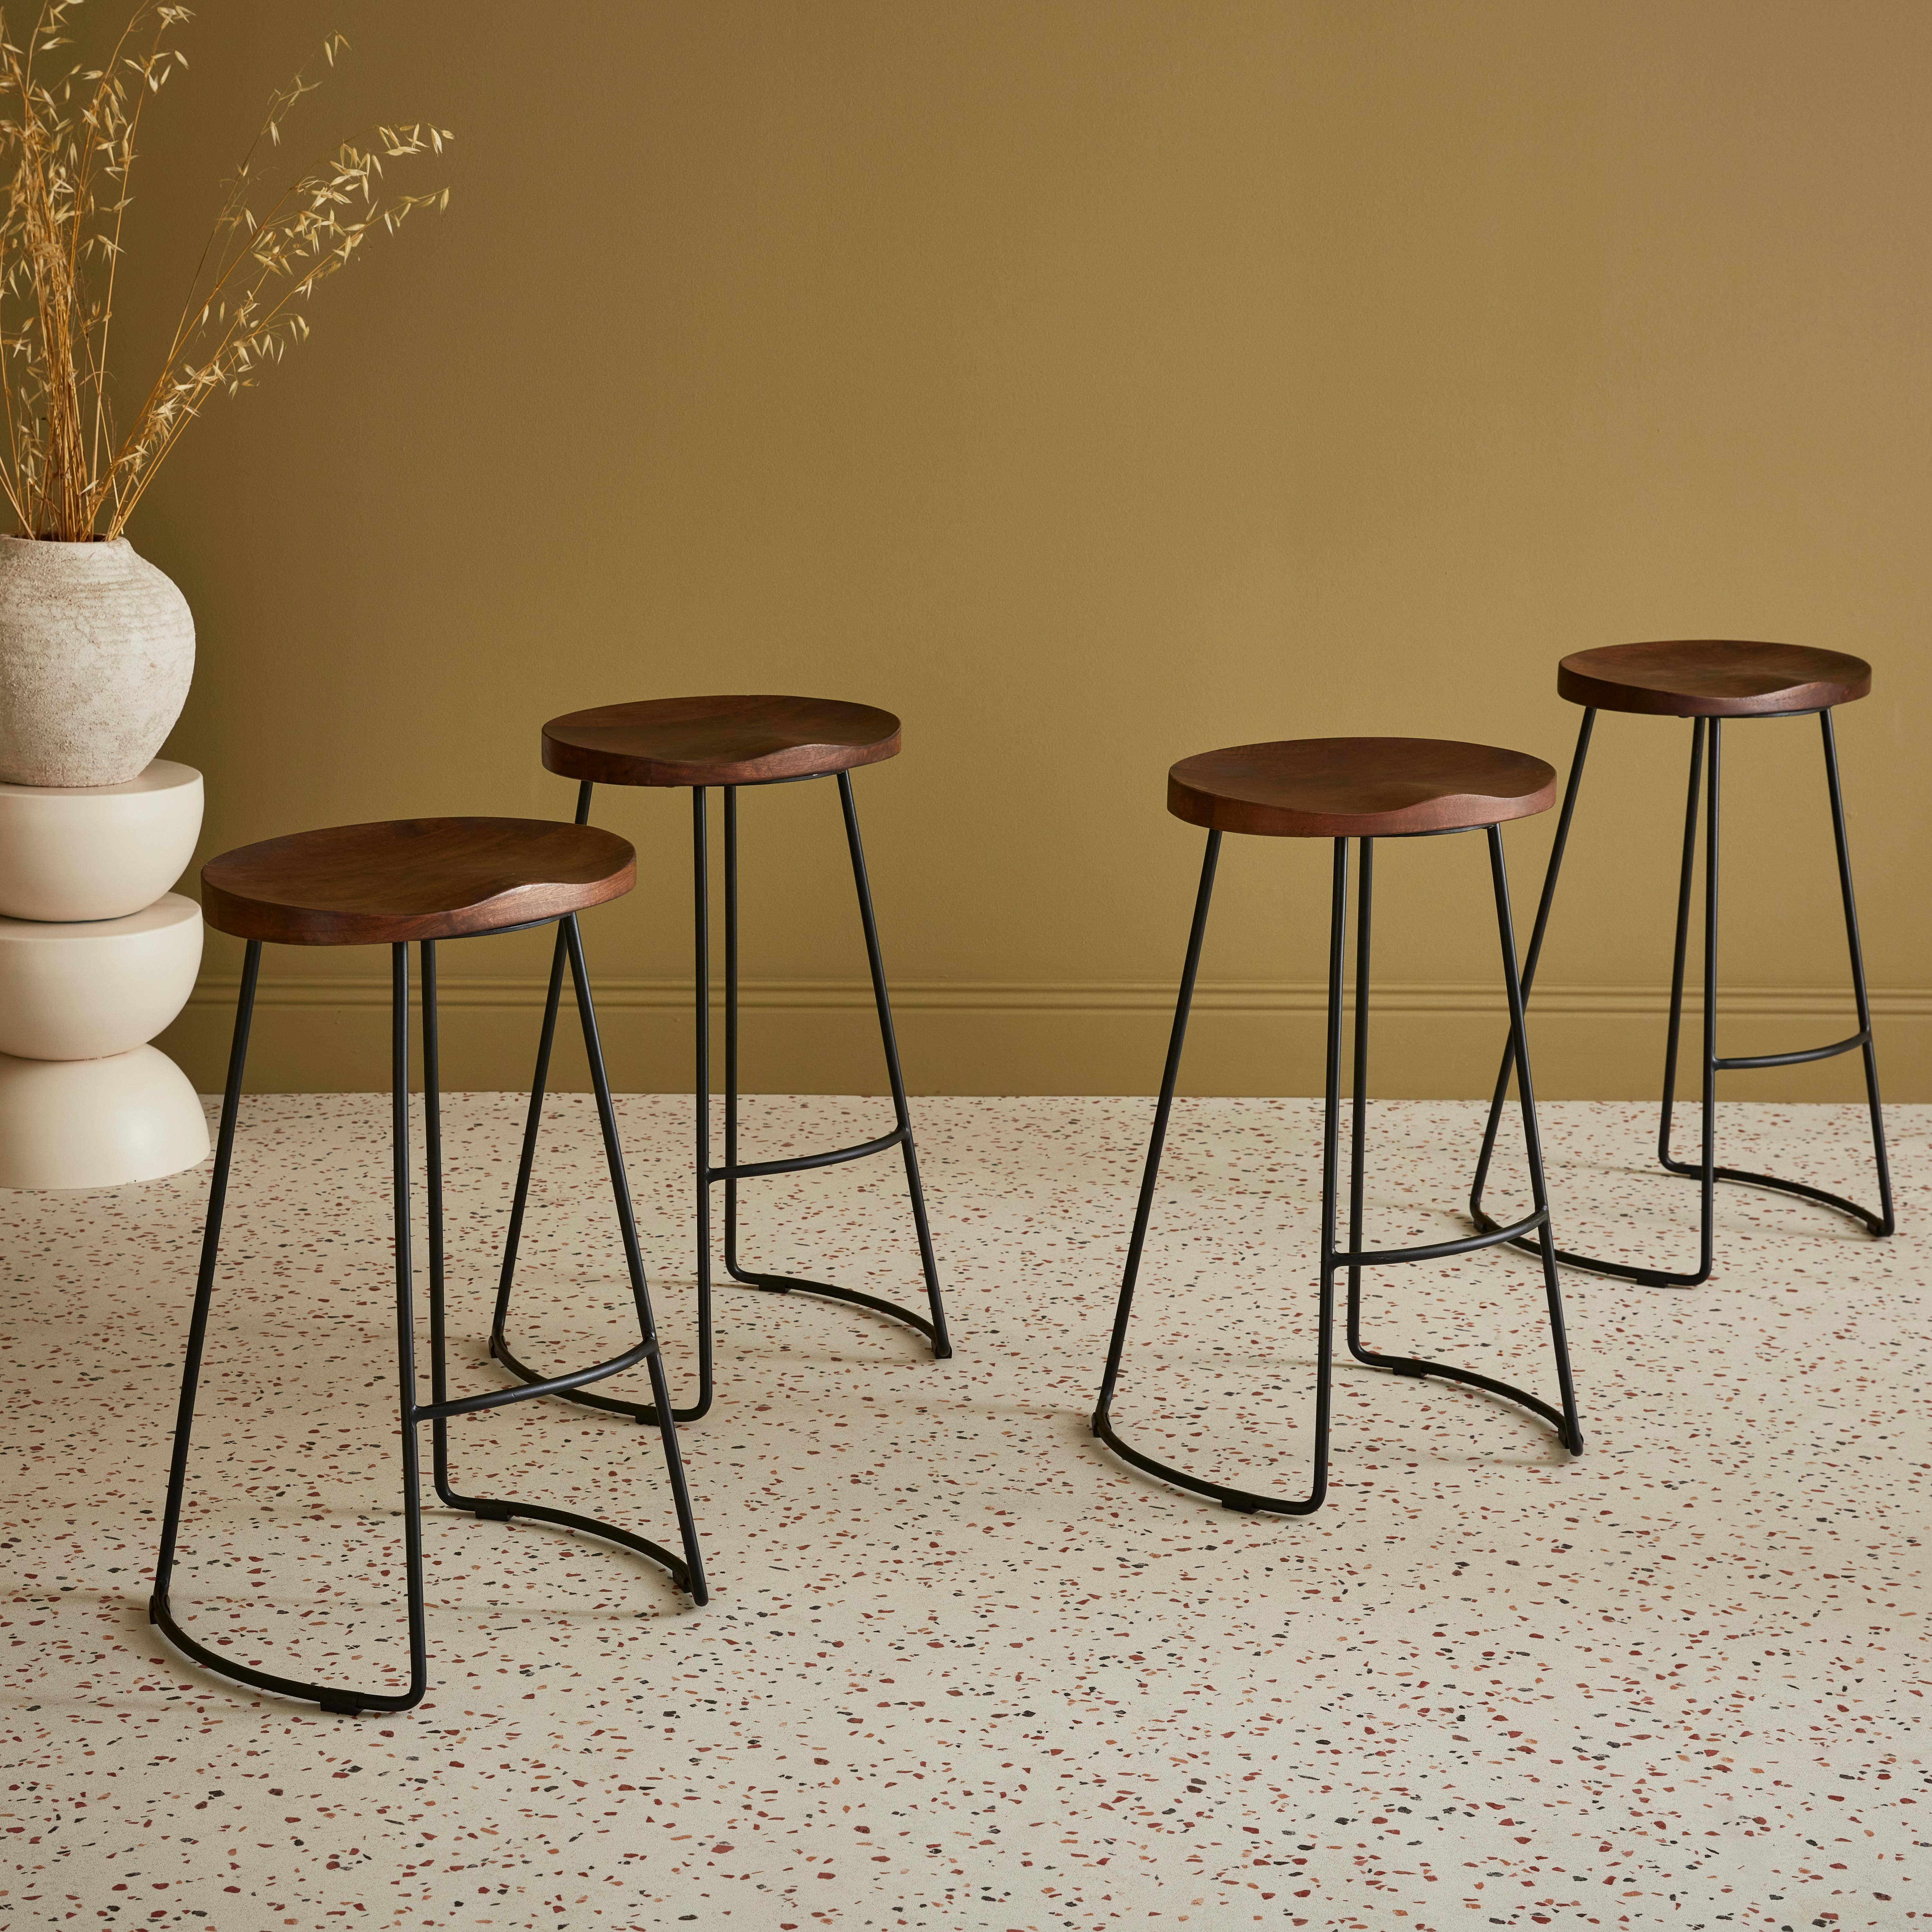 Set of 4 industrial metal and wooden bar stools, 44x36x65cm, Jaya, Light Walnut, Mango wood seat, black metal legs,sweeek,Photo2